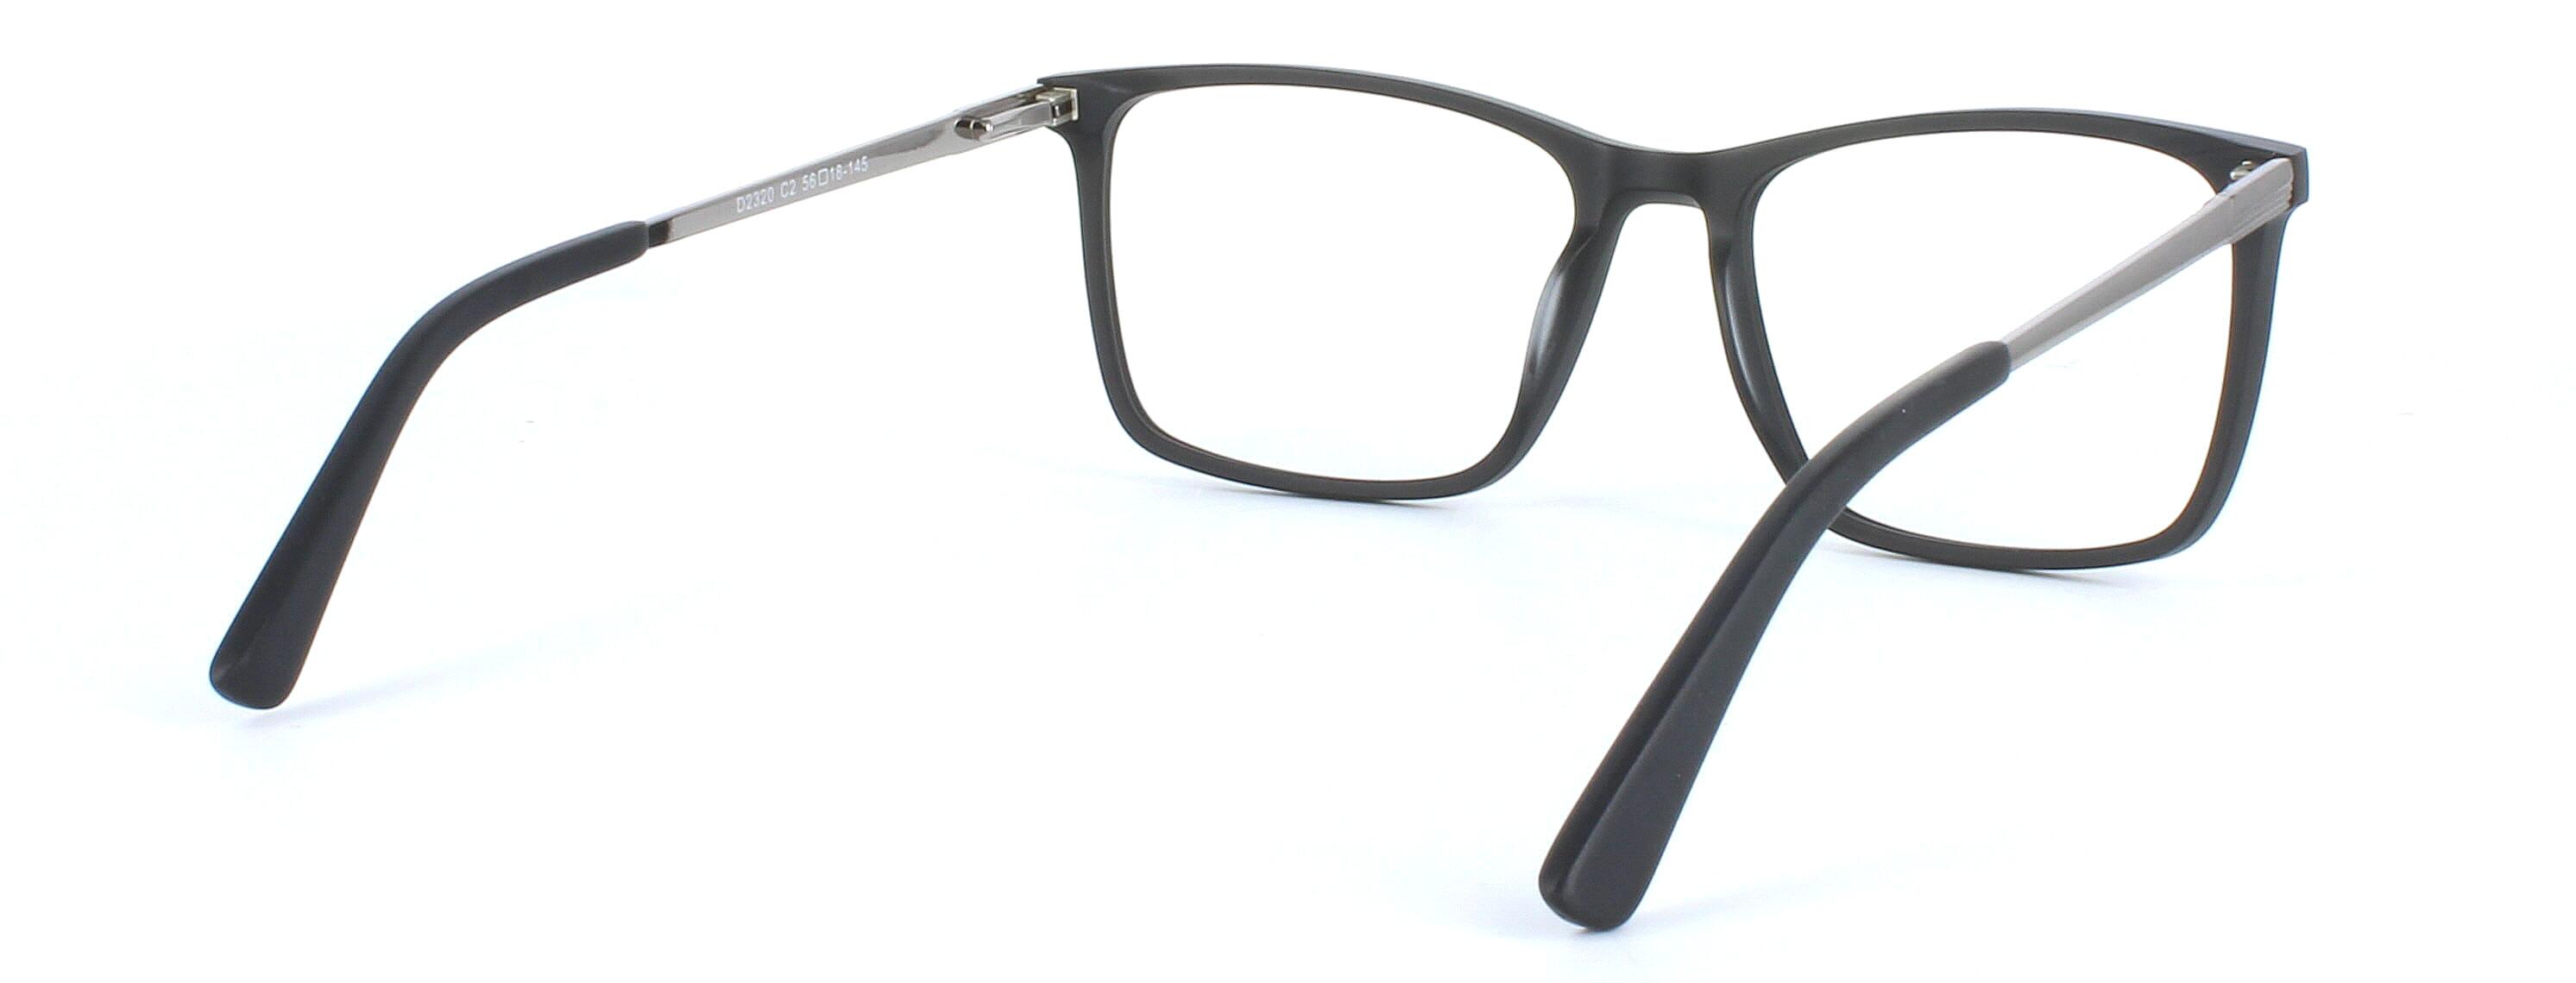 Farleigh - men's acetate glasses frame in matt black - image view 4